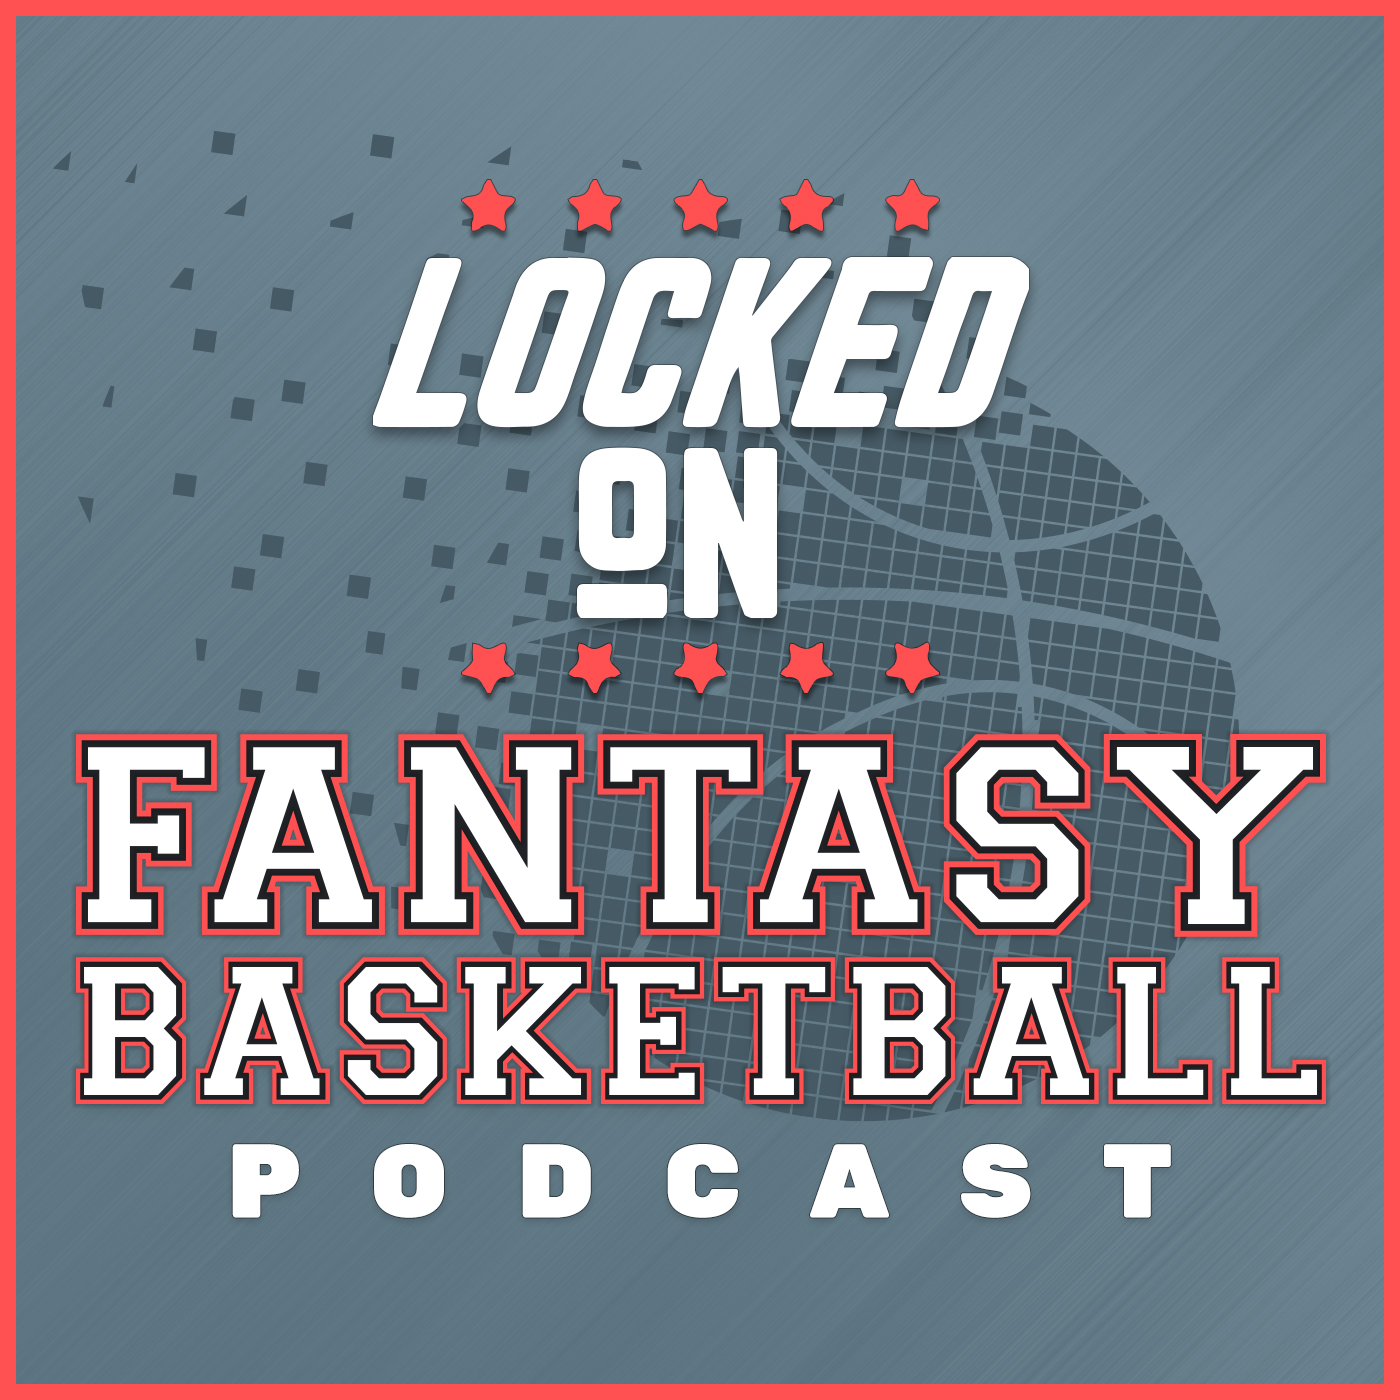 Locked On NBA Podcast 